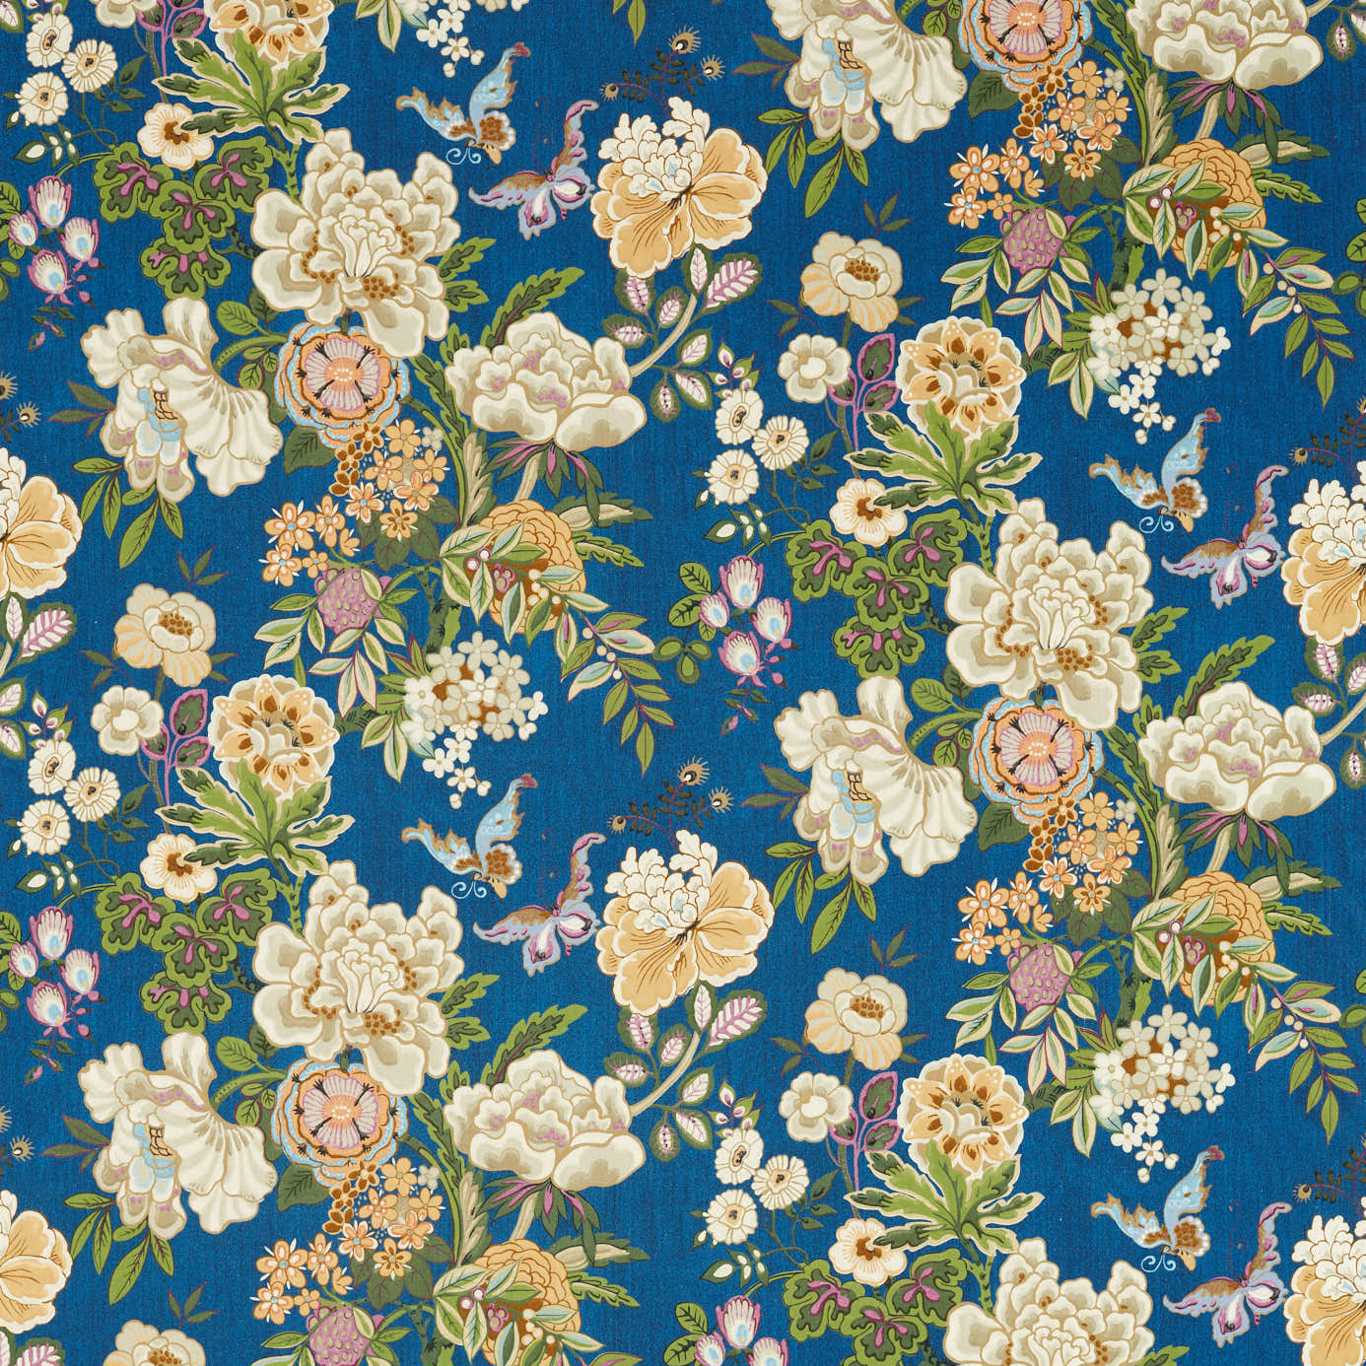 Emperor Peony Fabric by Sanderson - DWAT226960 - Herbal Blue /Amber